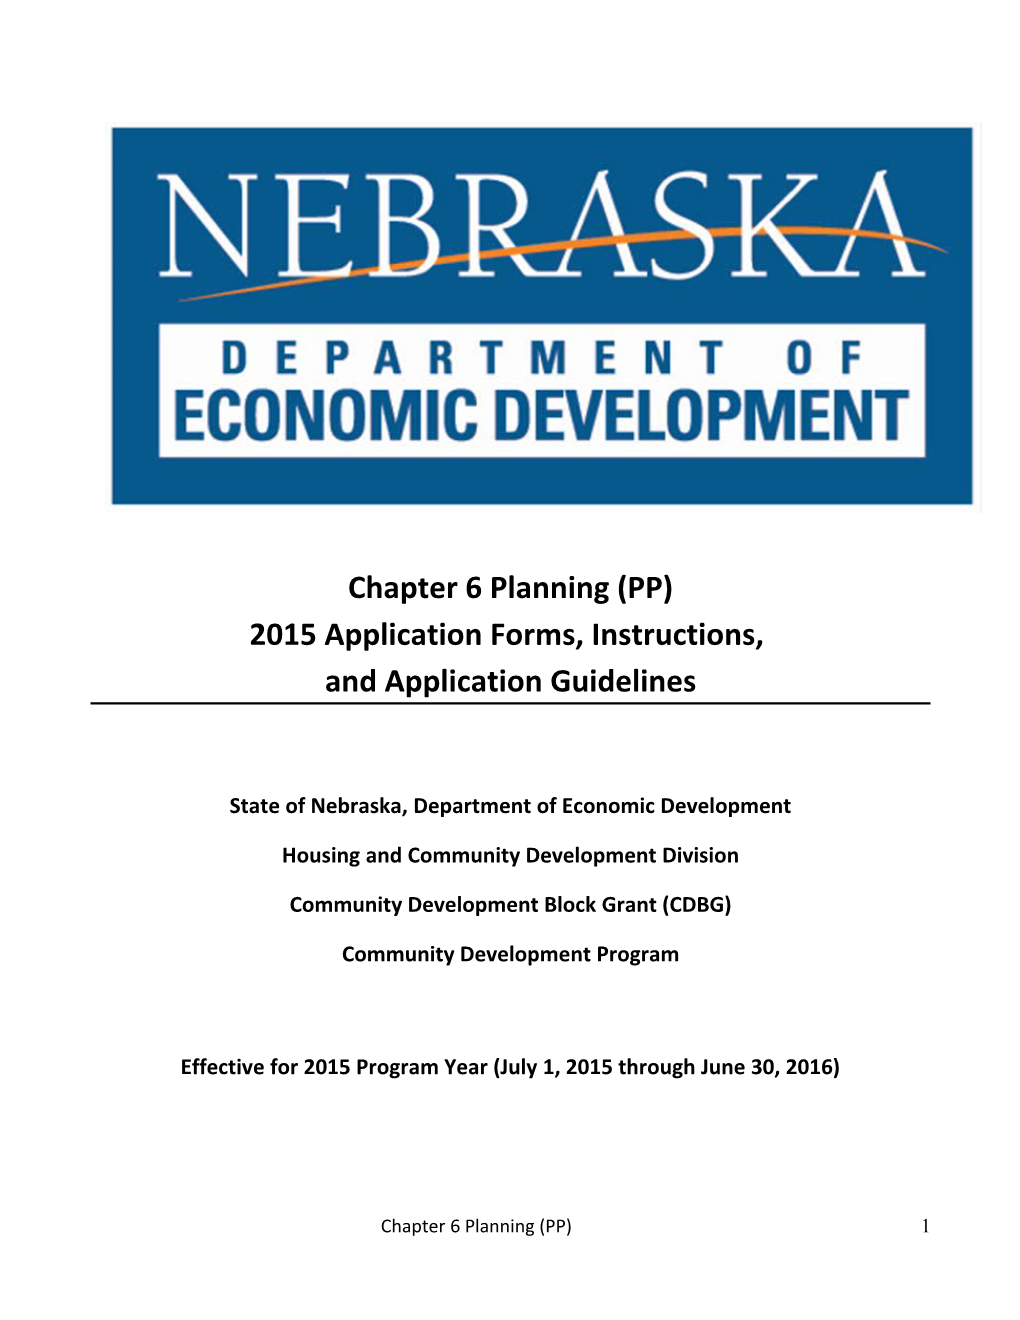 State of Nebraska, Department of Economic Development